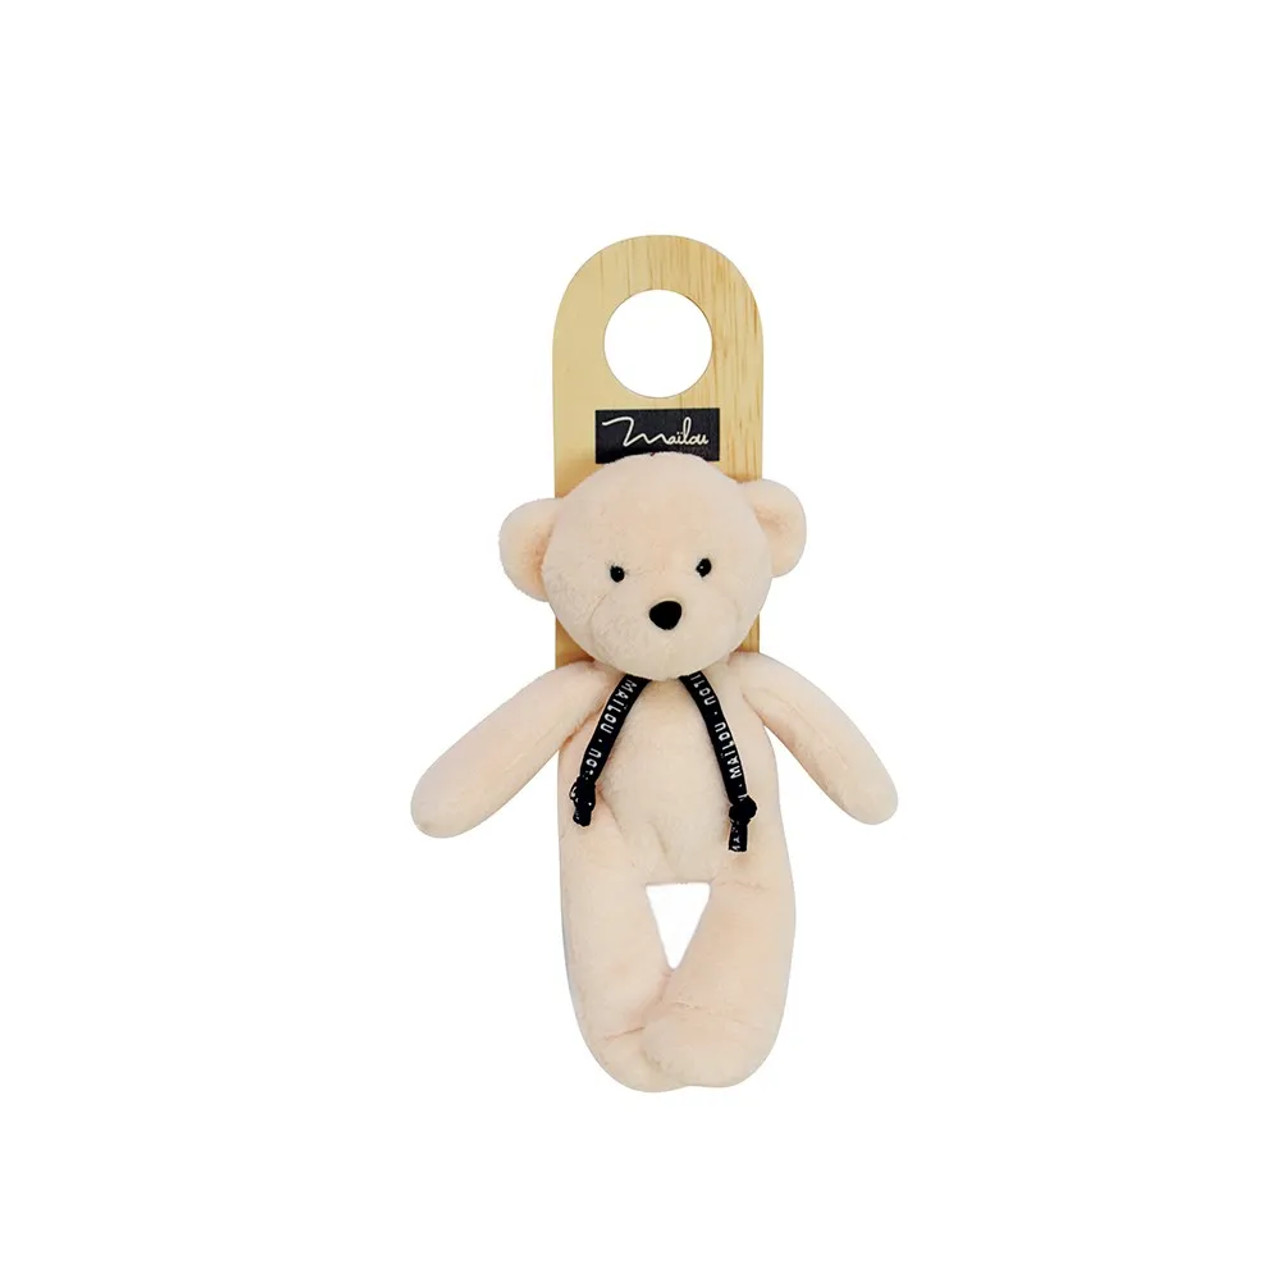 Petite Ivory Bear Plush Toy  23cm, Dorlotin, Mailou Tradition France